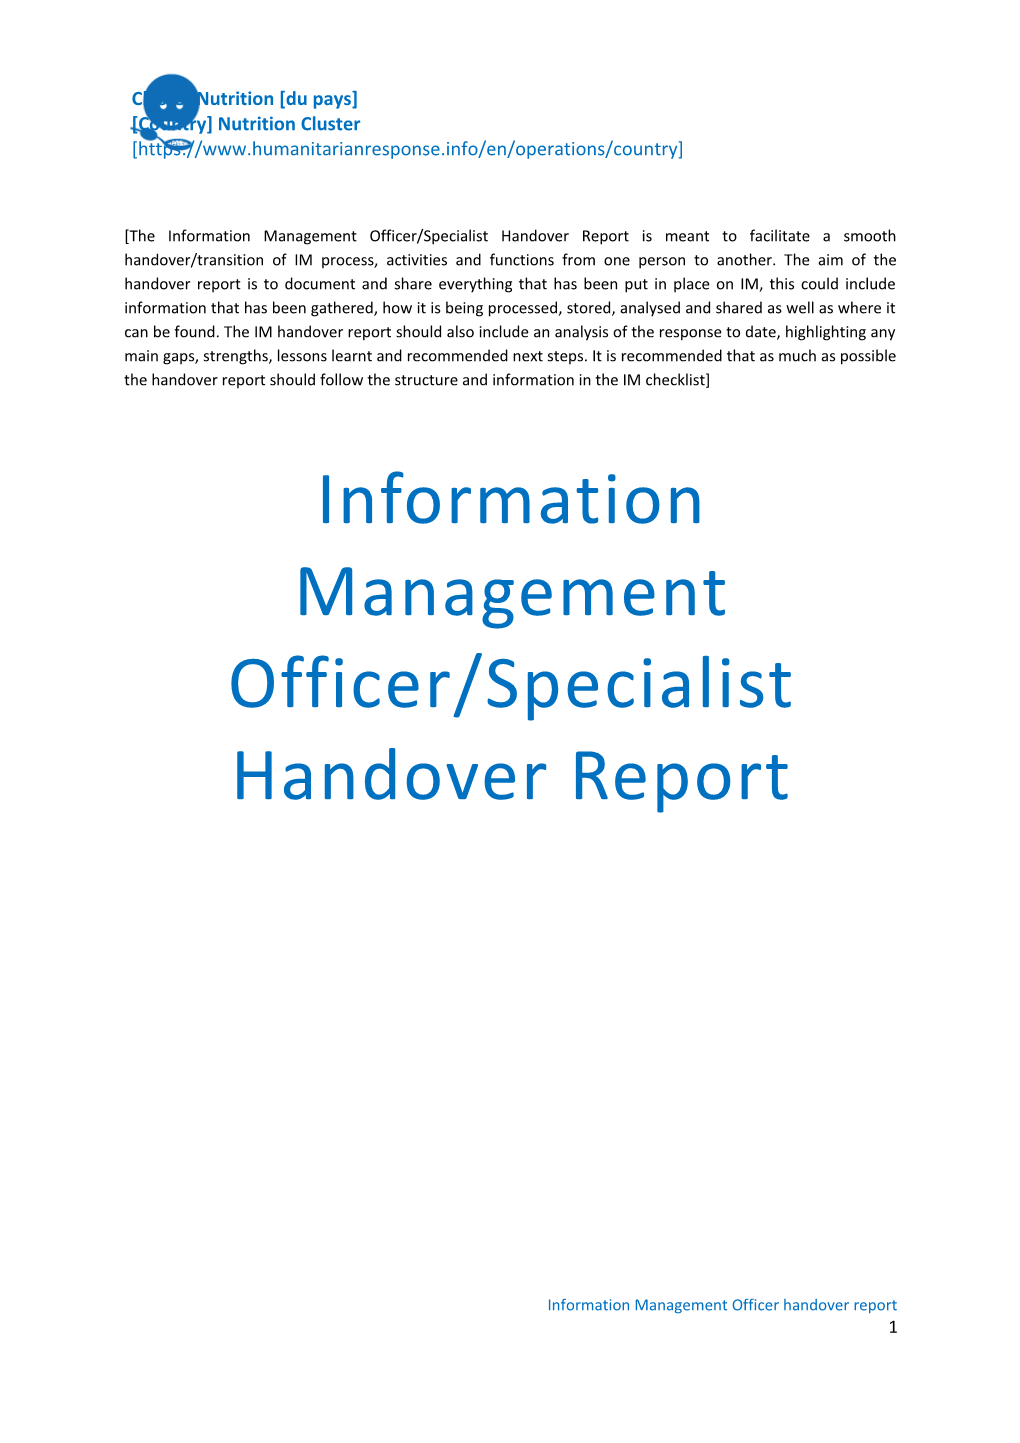 Information Management Officer/Specialist Handover Report